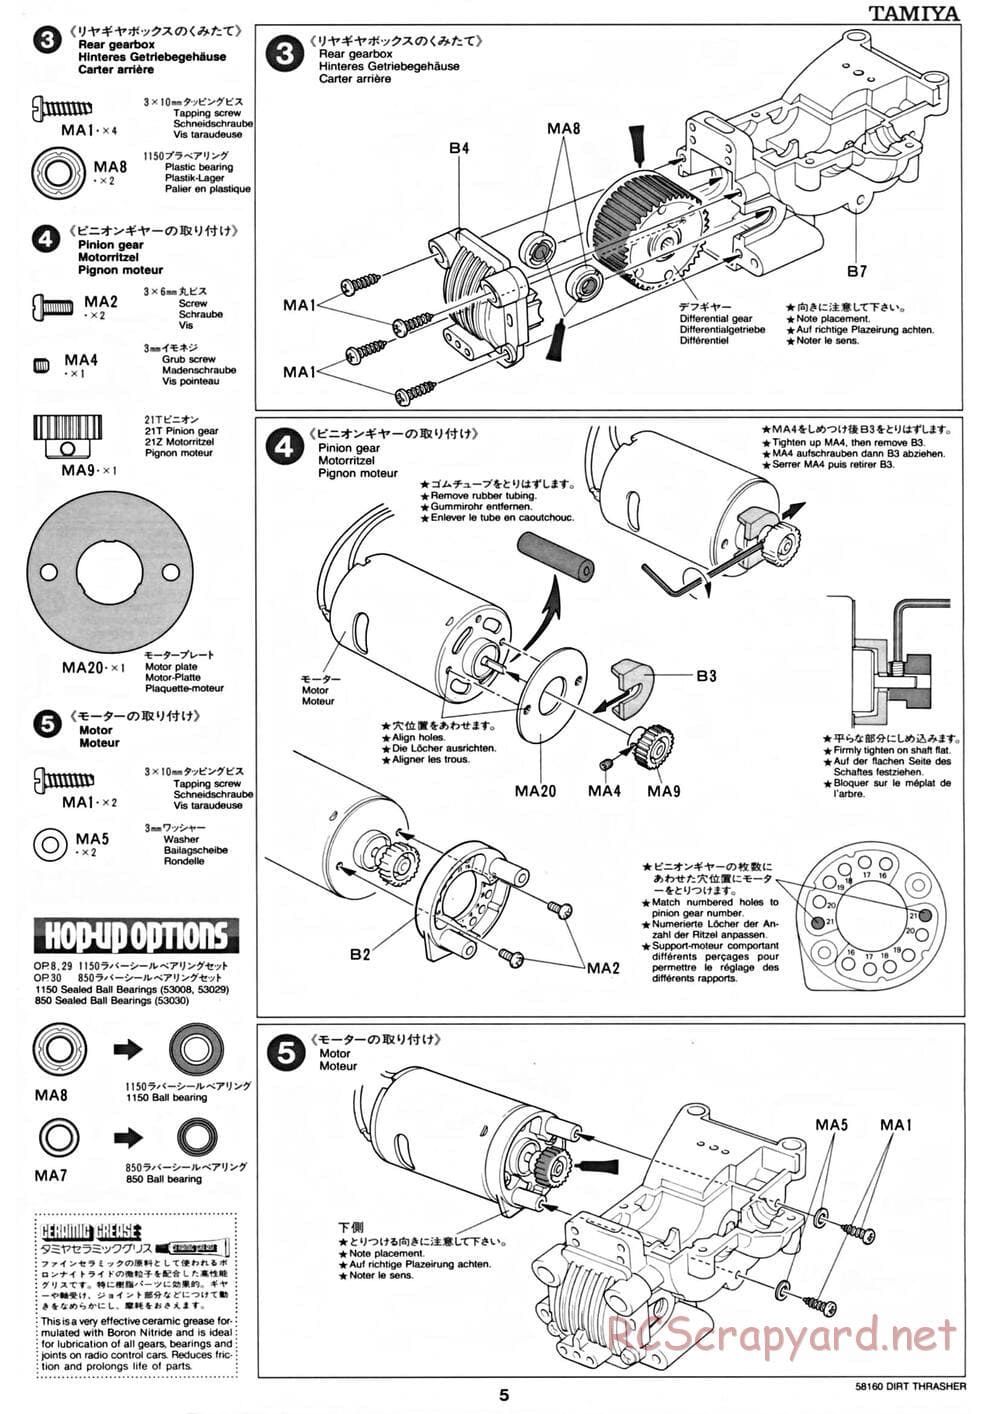 Tamiya - Dirt Thrasher Chassis - Manual - Page 5